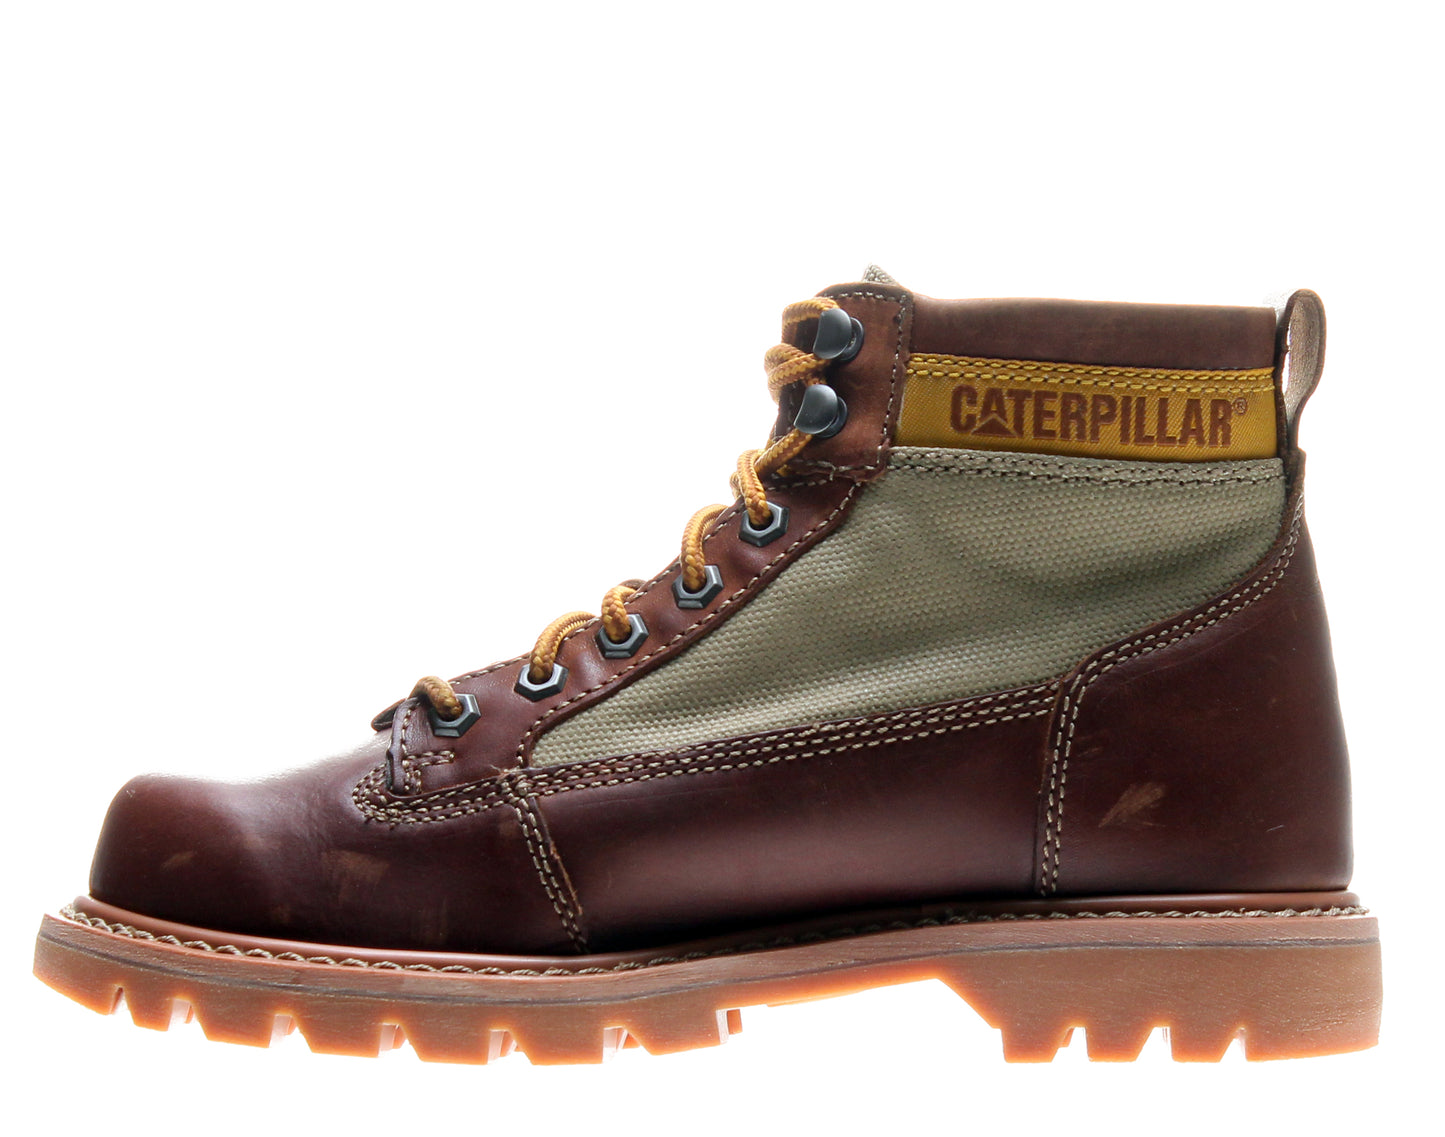 Caterpillar Ralston Canvas Men's Boots